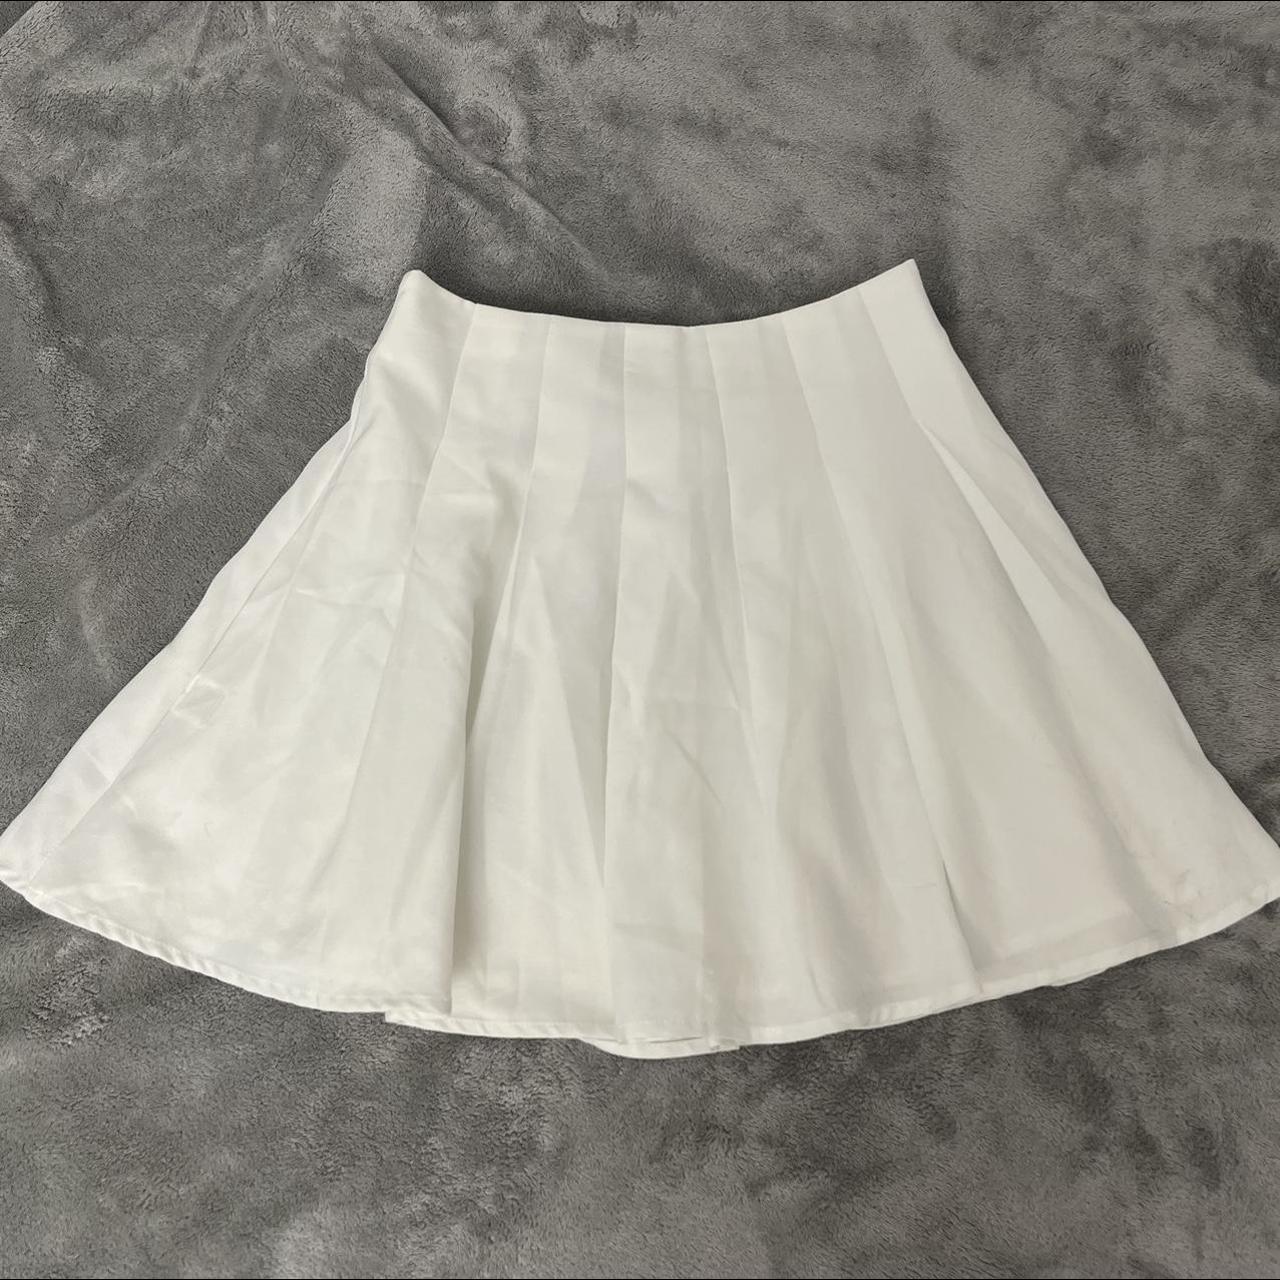 Romwe Women's White Skirt